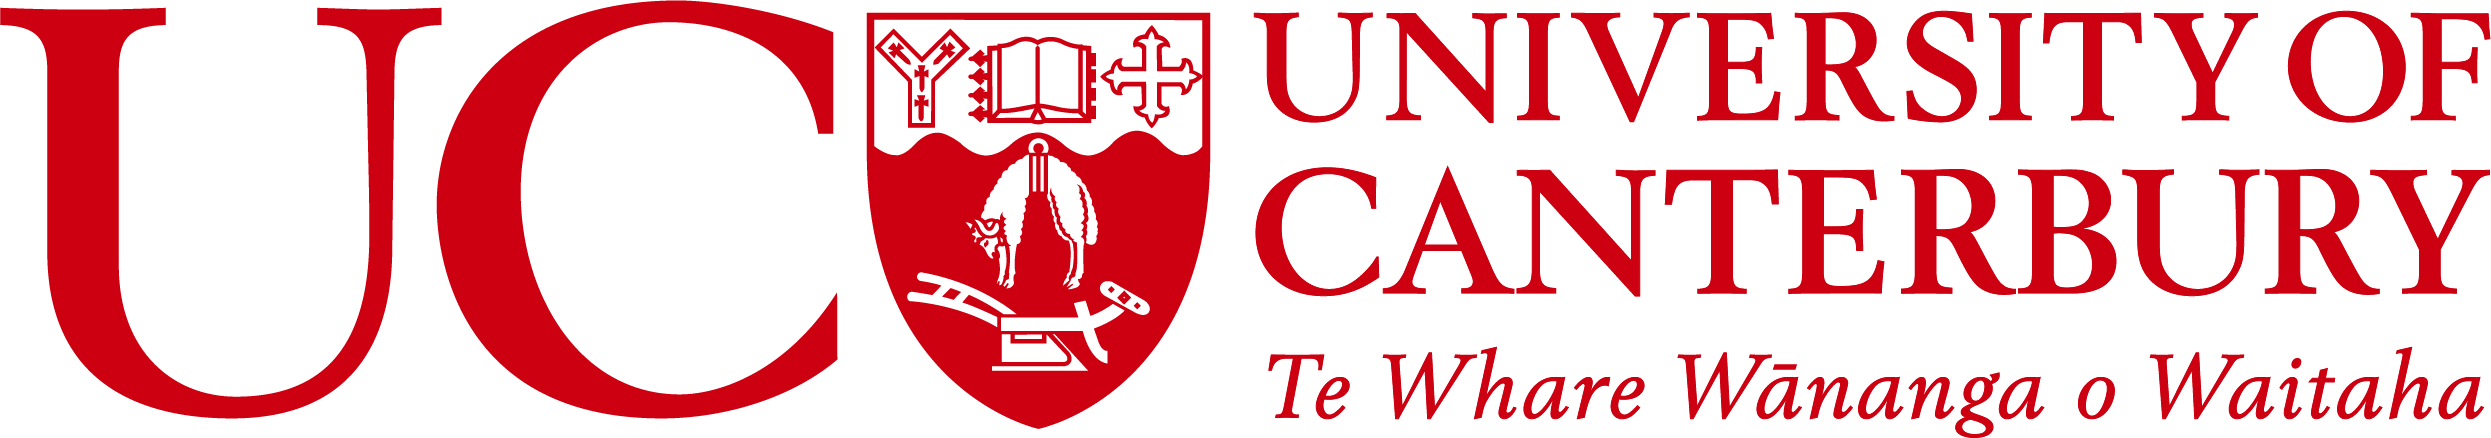 University of Canterbury red logo with Te Reo